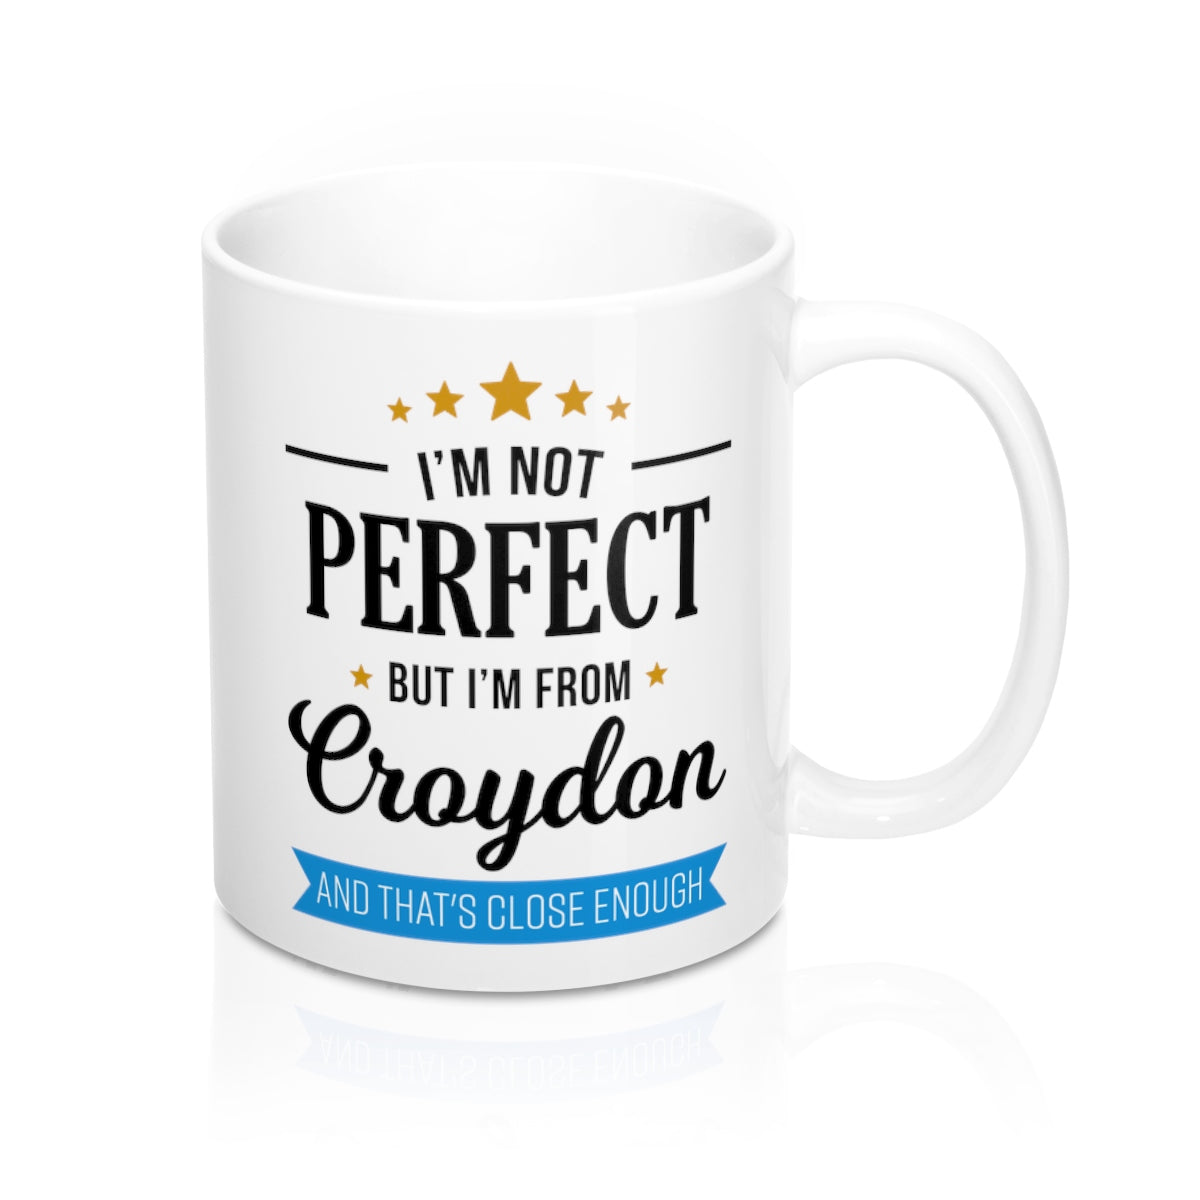 I'm Not Perfect But I'm From Croydon Mug